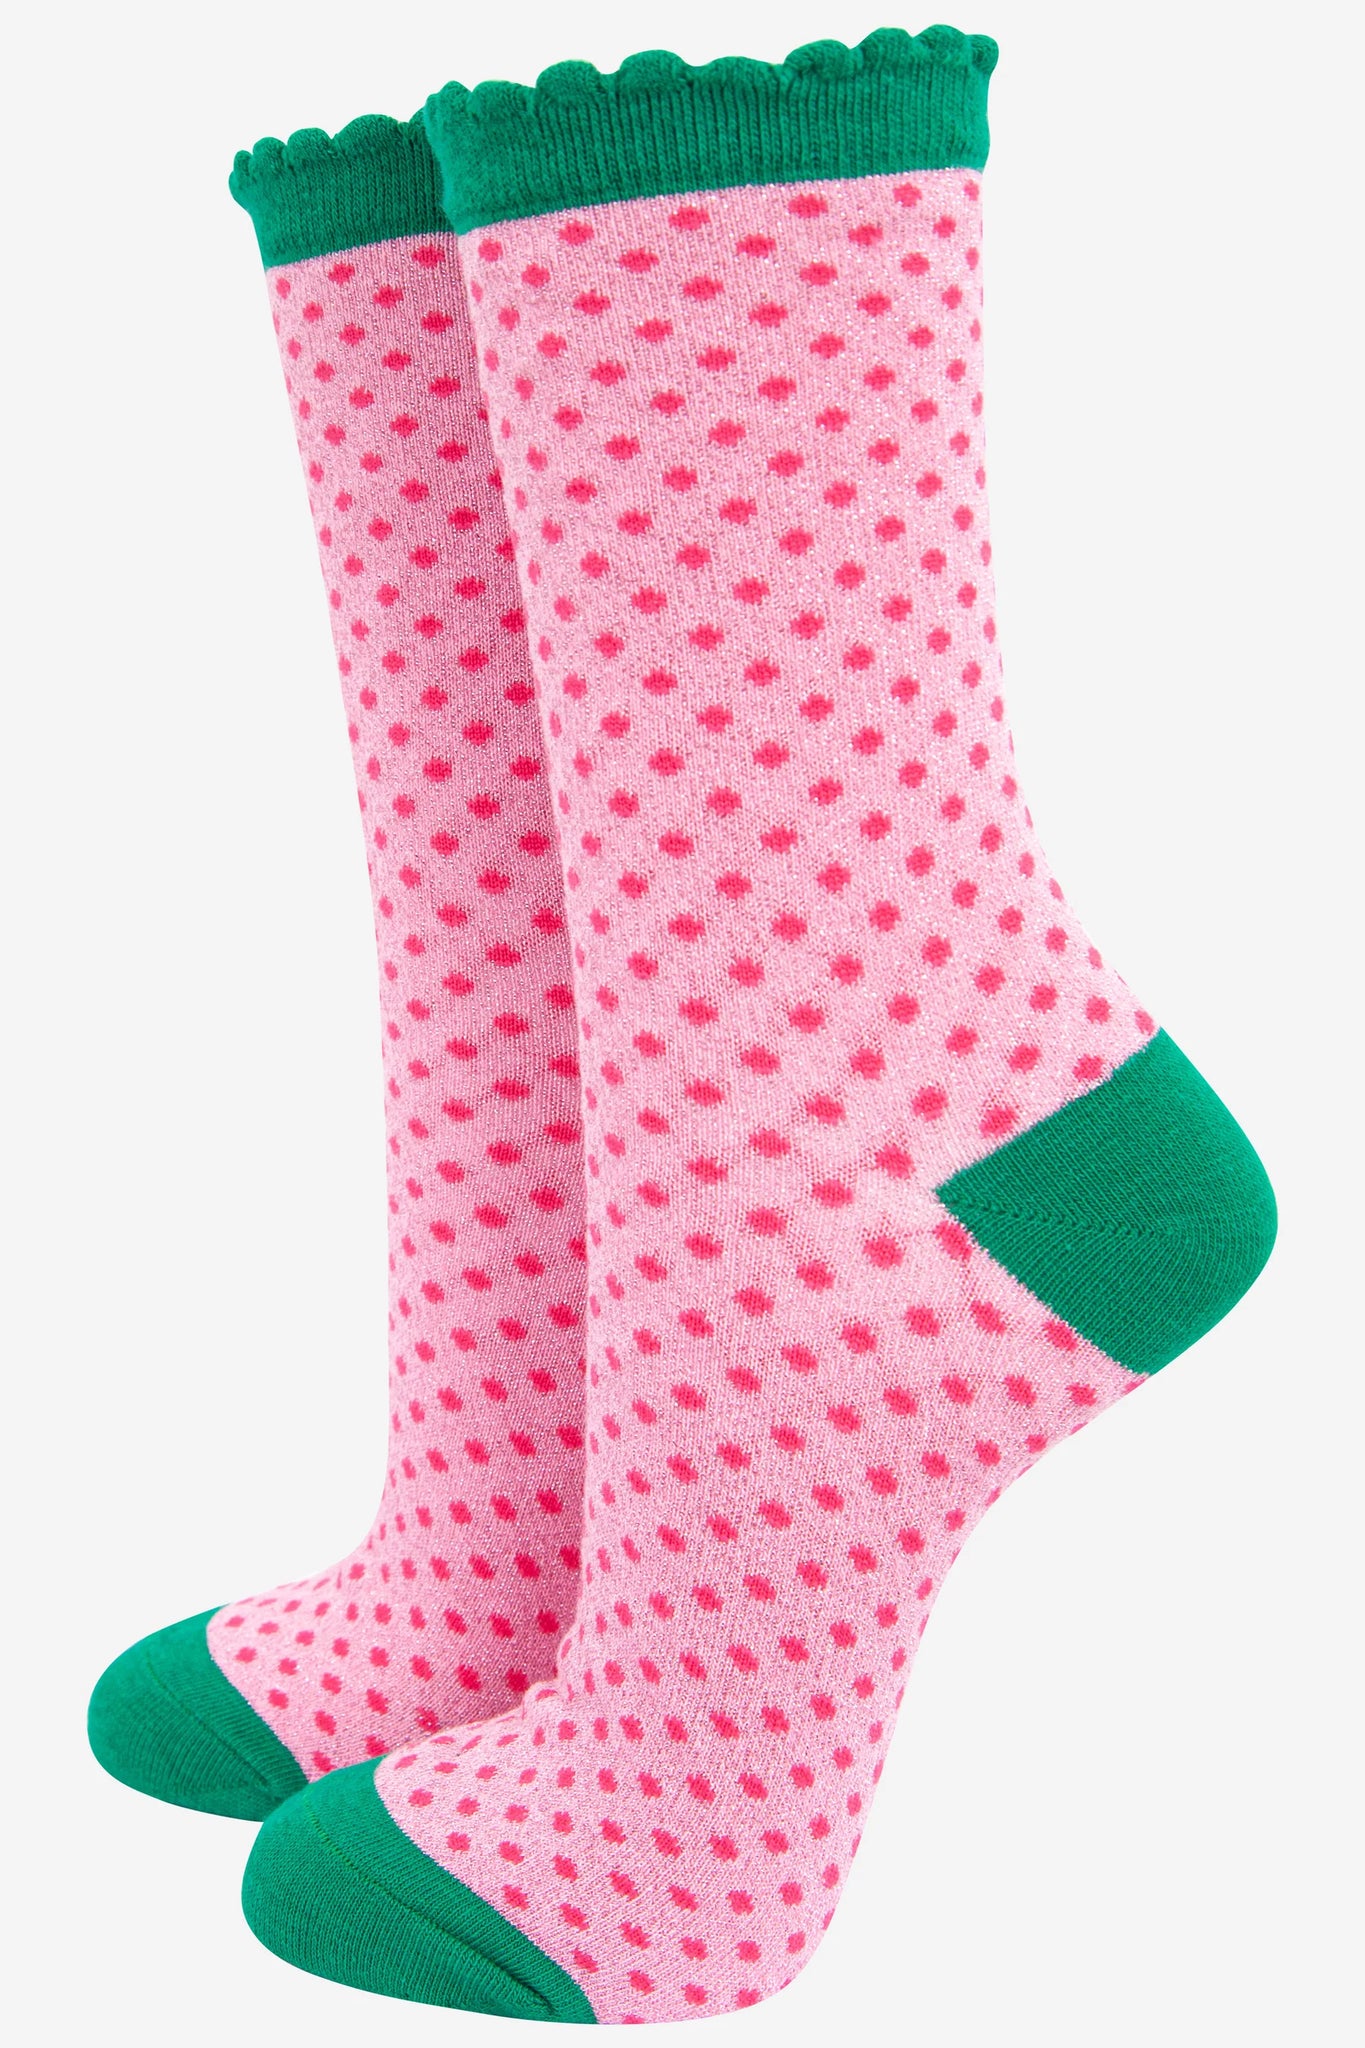 Women's Cotton Glitter Socks - Polka Dot Spots - Scalloped Top - Pink & Green